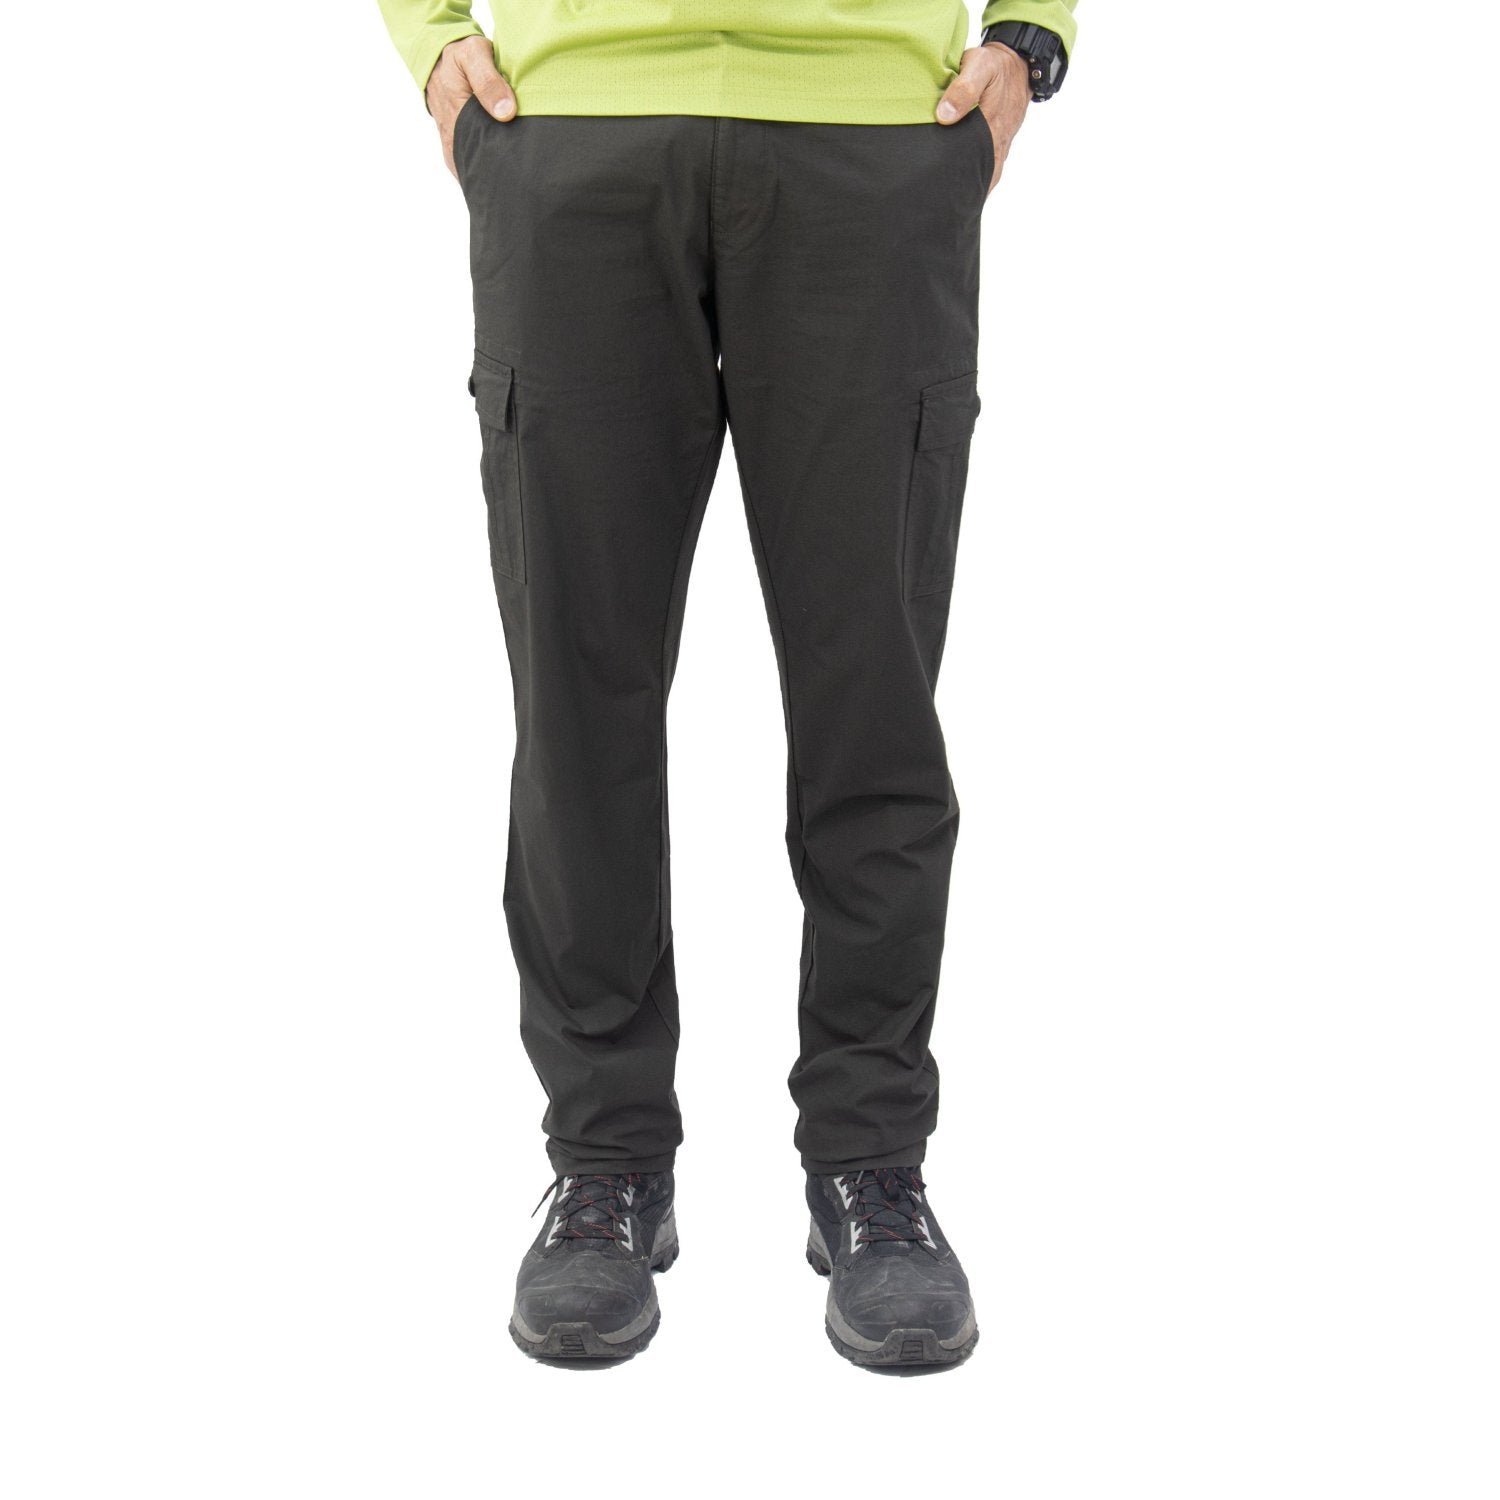 Buy Gokyo Corbett Cargo Pants Stretch Dark Olive | Trekking & Hiking Pants at Gokyo Outdoor Clothing & Gear